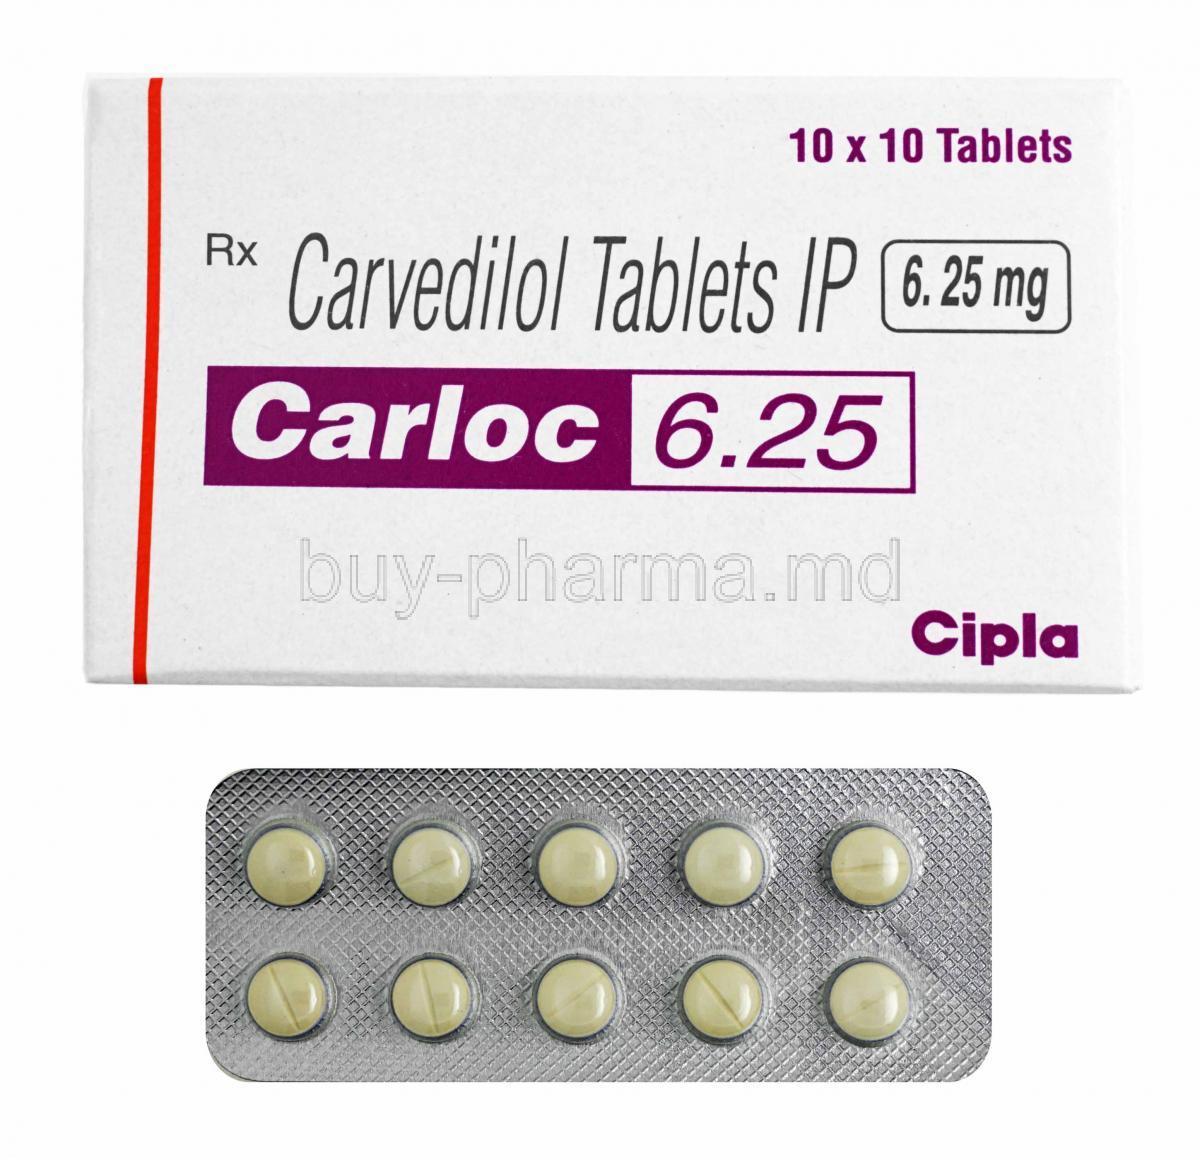 Carloc, Carvedilol 6.25mg box and tablets